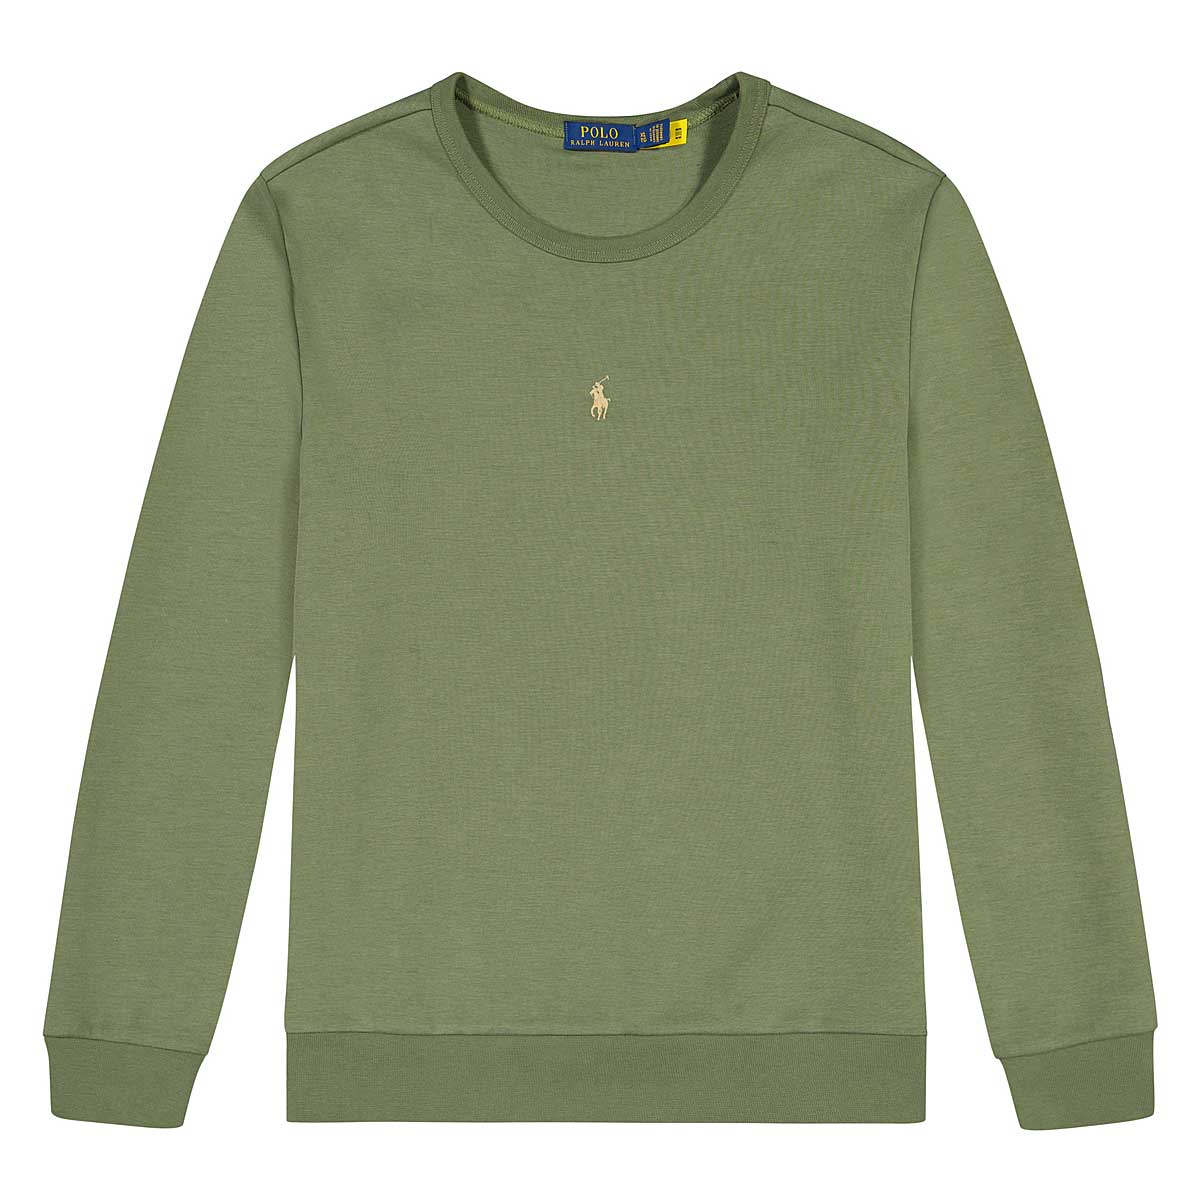 Polo Ralph Lauren Center Logo Sweatshirt, Army Olive